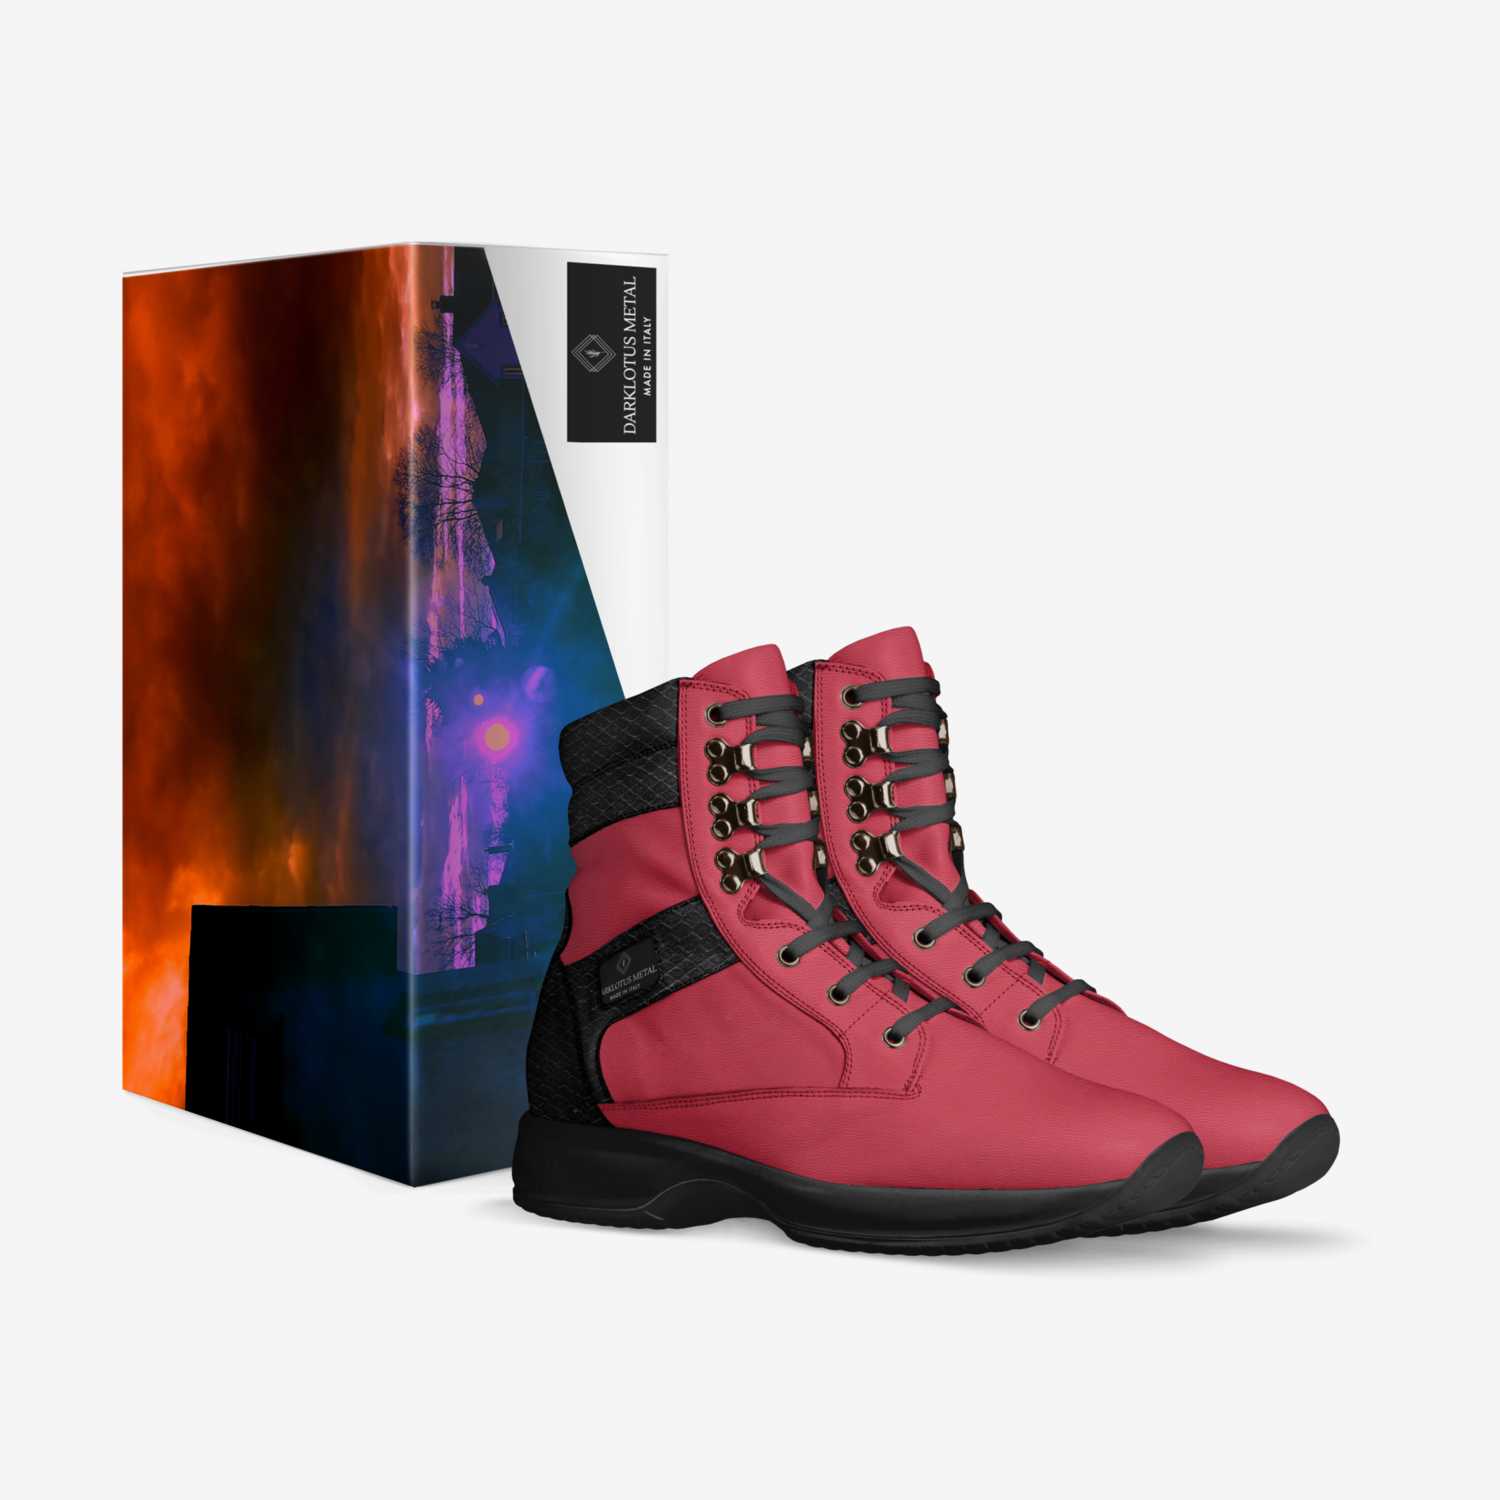 DarkLotus Metal custom made in Italy shoes by Benjamin Fliederbaum | Box view